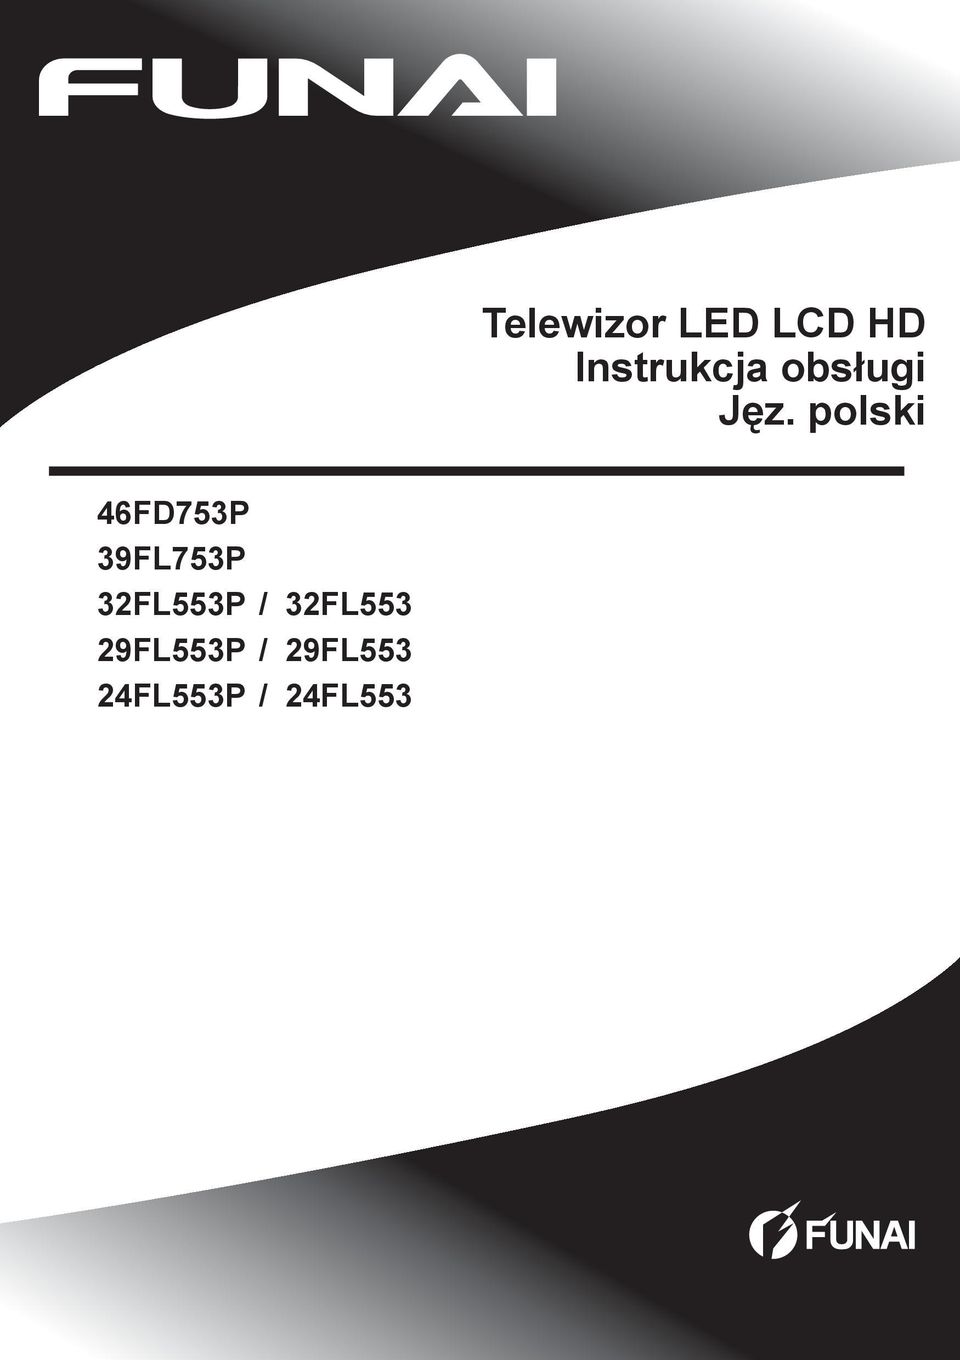 24FL553P / 24FL553 Telewizor